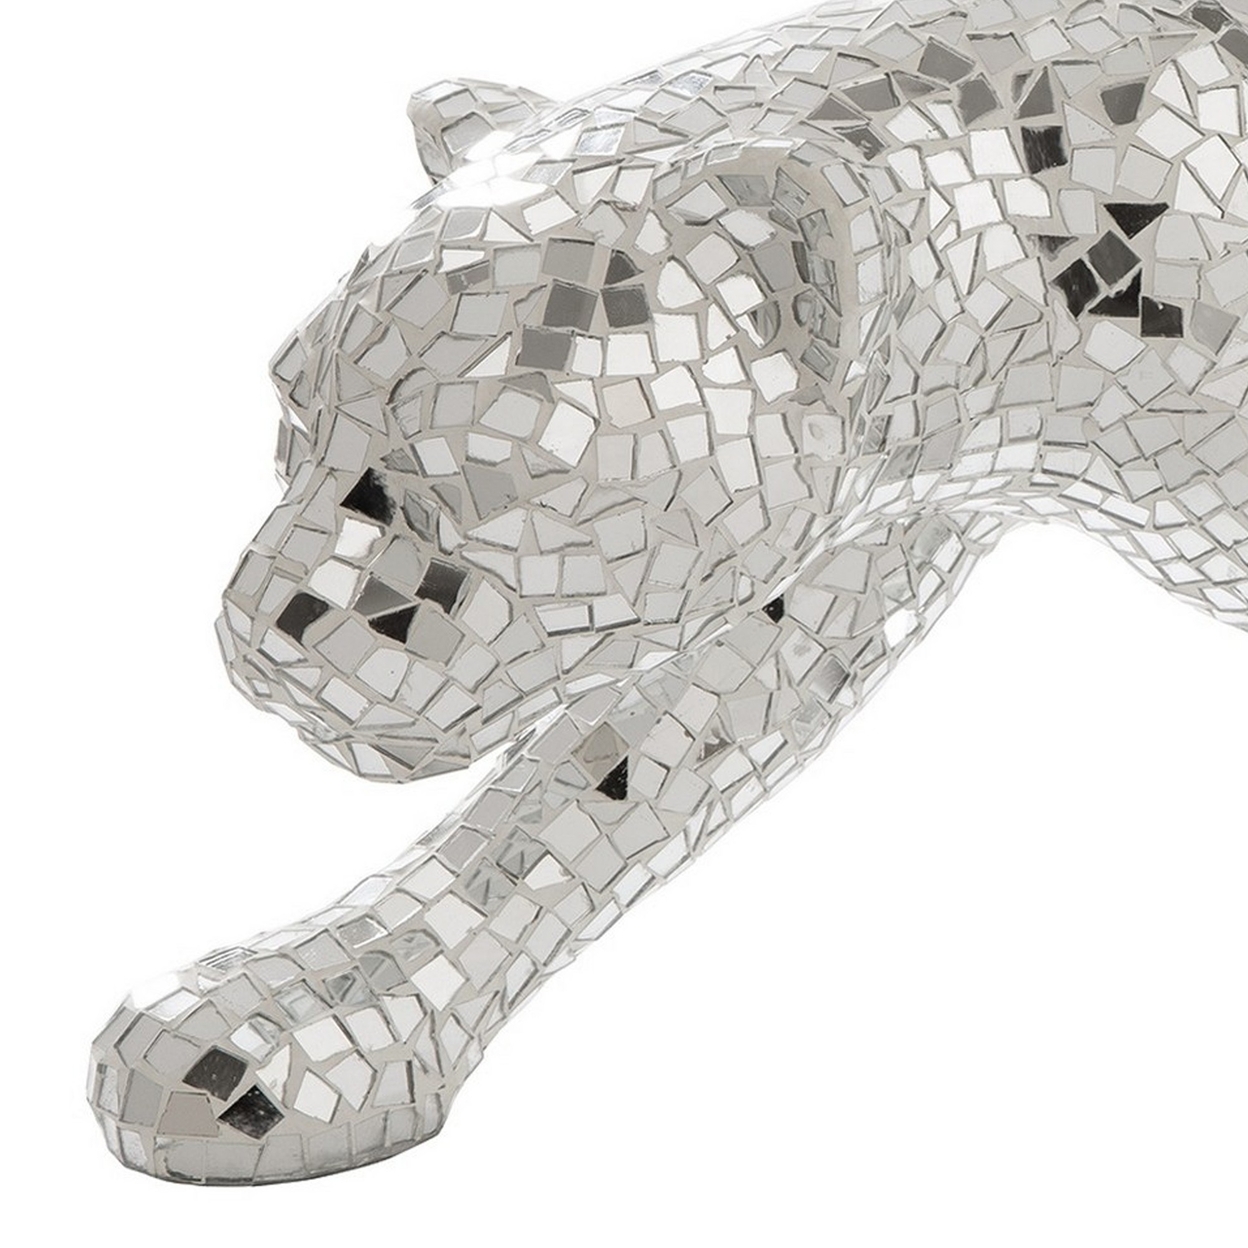 Mirrored Standing Panther With Glass Mosaic Pattern, Silver- Saltoro Sherpi